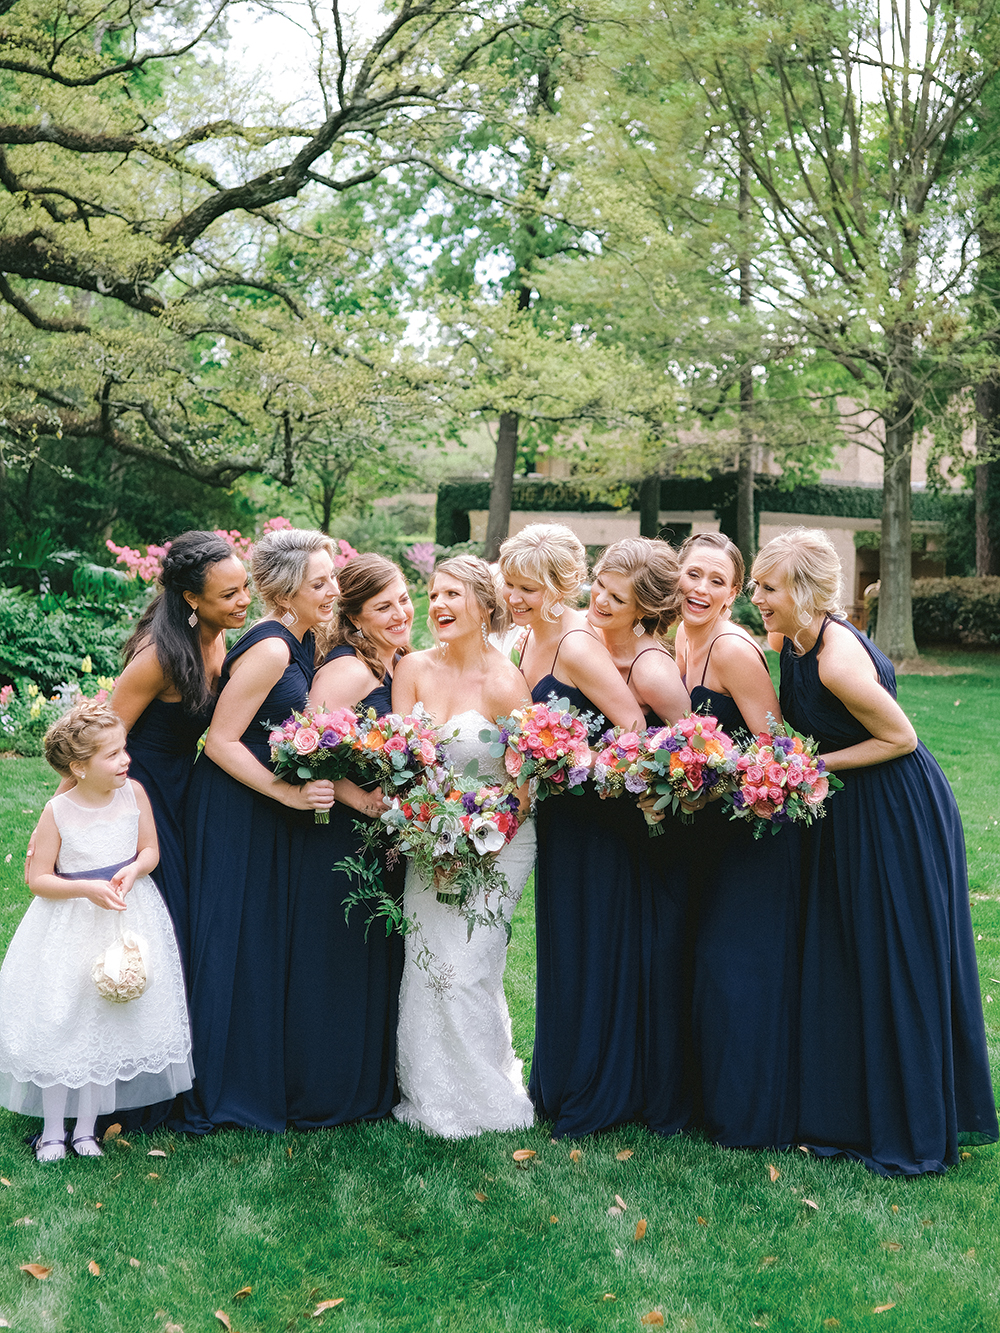 bridal party - outdoor photos - navy bridesmaids dresses